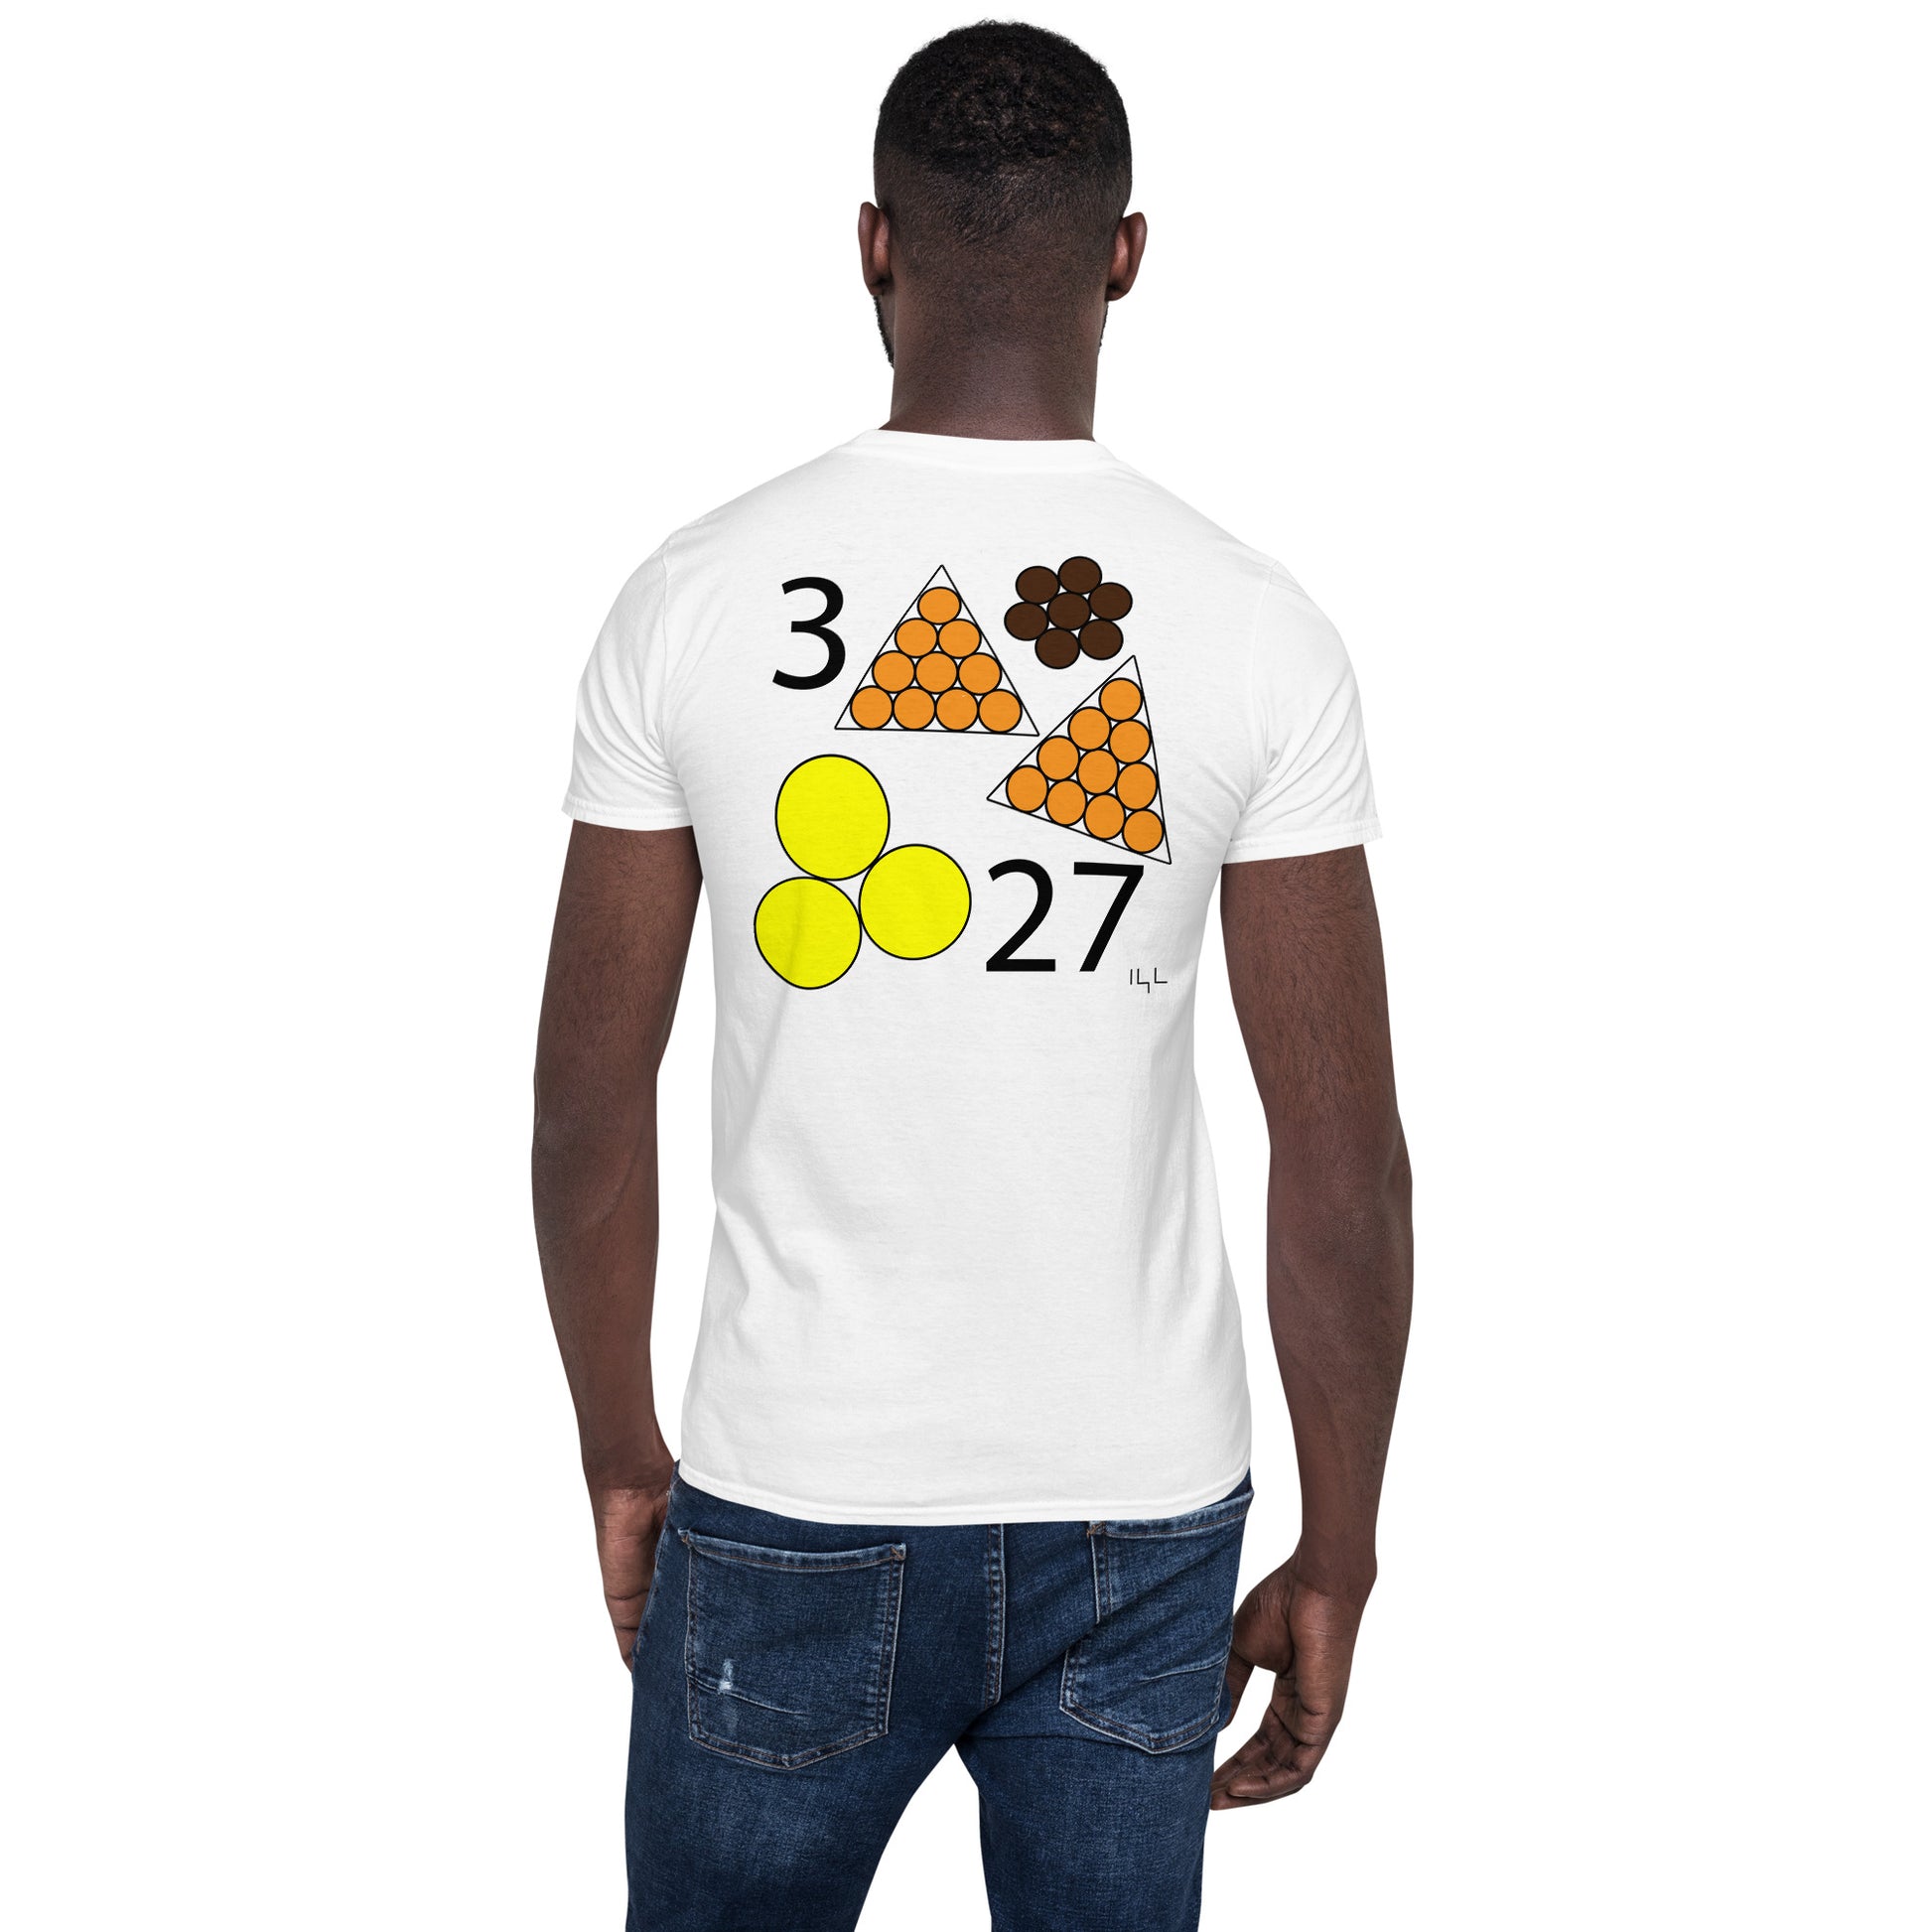 #0327 A Yellow March 27th Short-Sleeve Unisex T-Shirt - -Lighten Your Life [ItsAboutTime.Life][date]